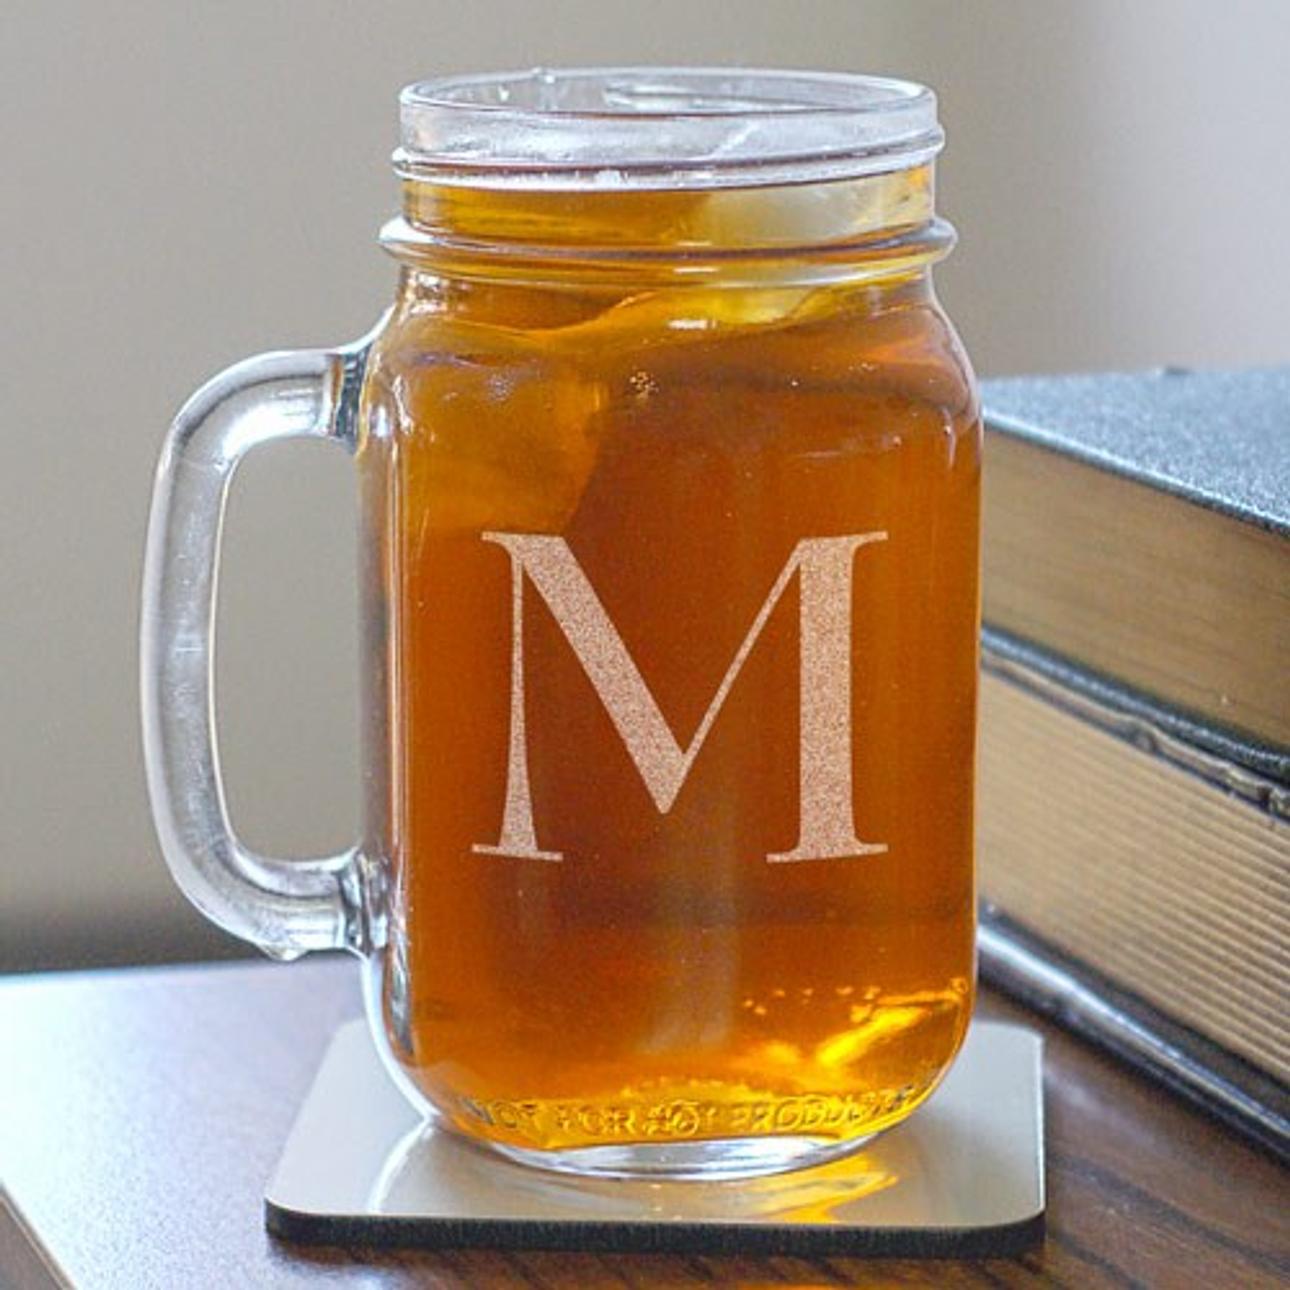 Personalized Old Fashion Mason Jar Drinking Glasses - Set of 4